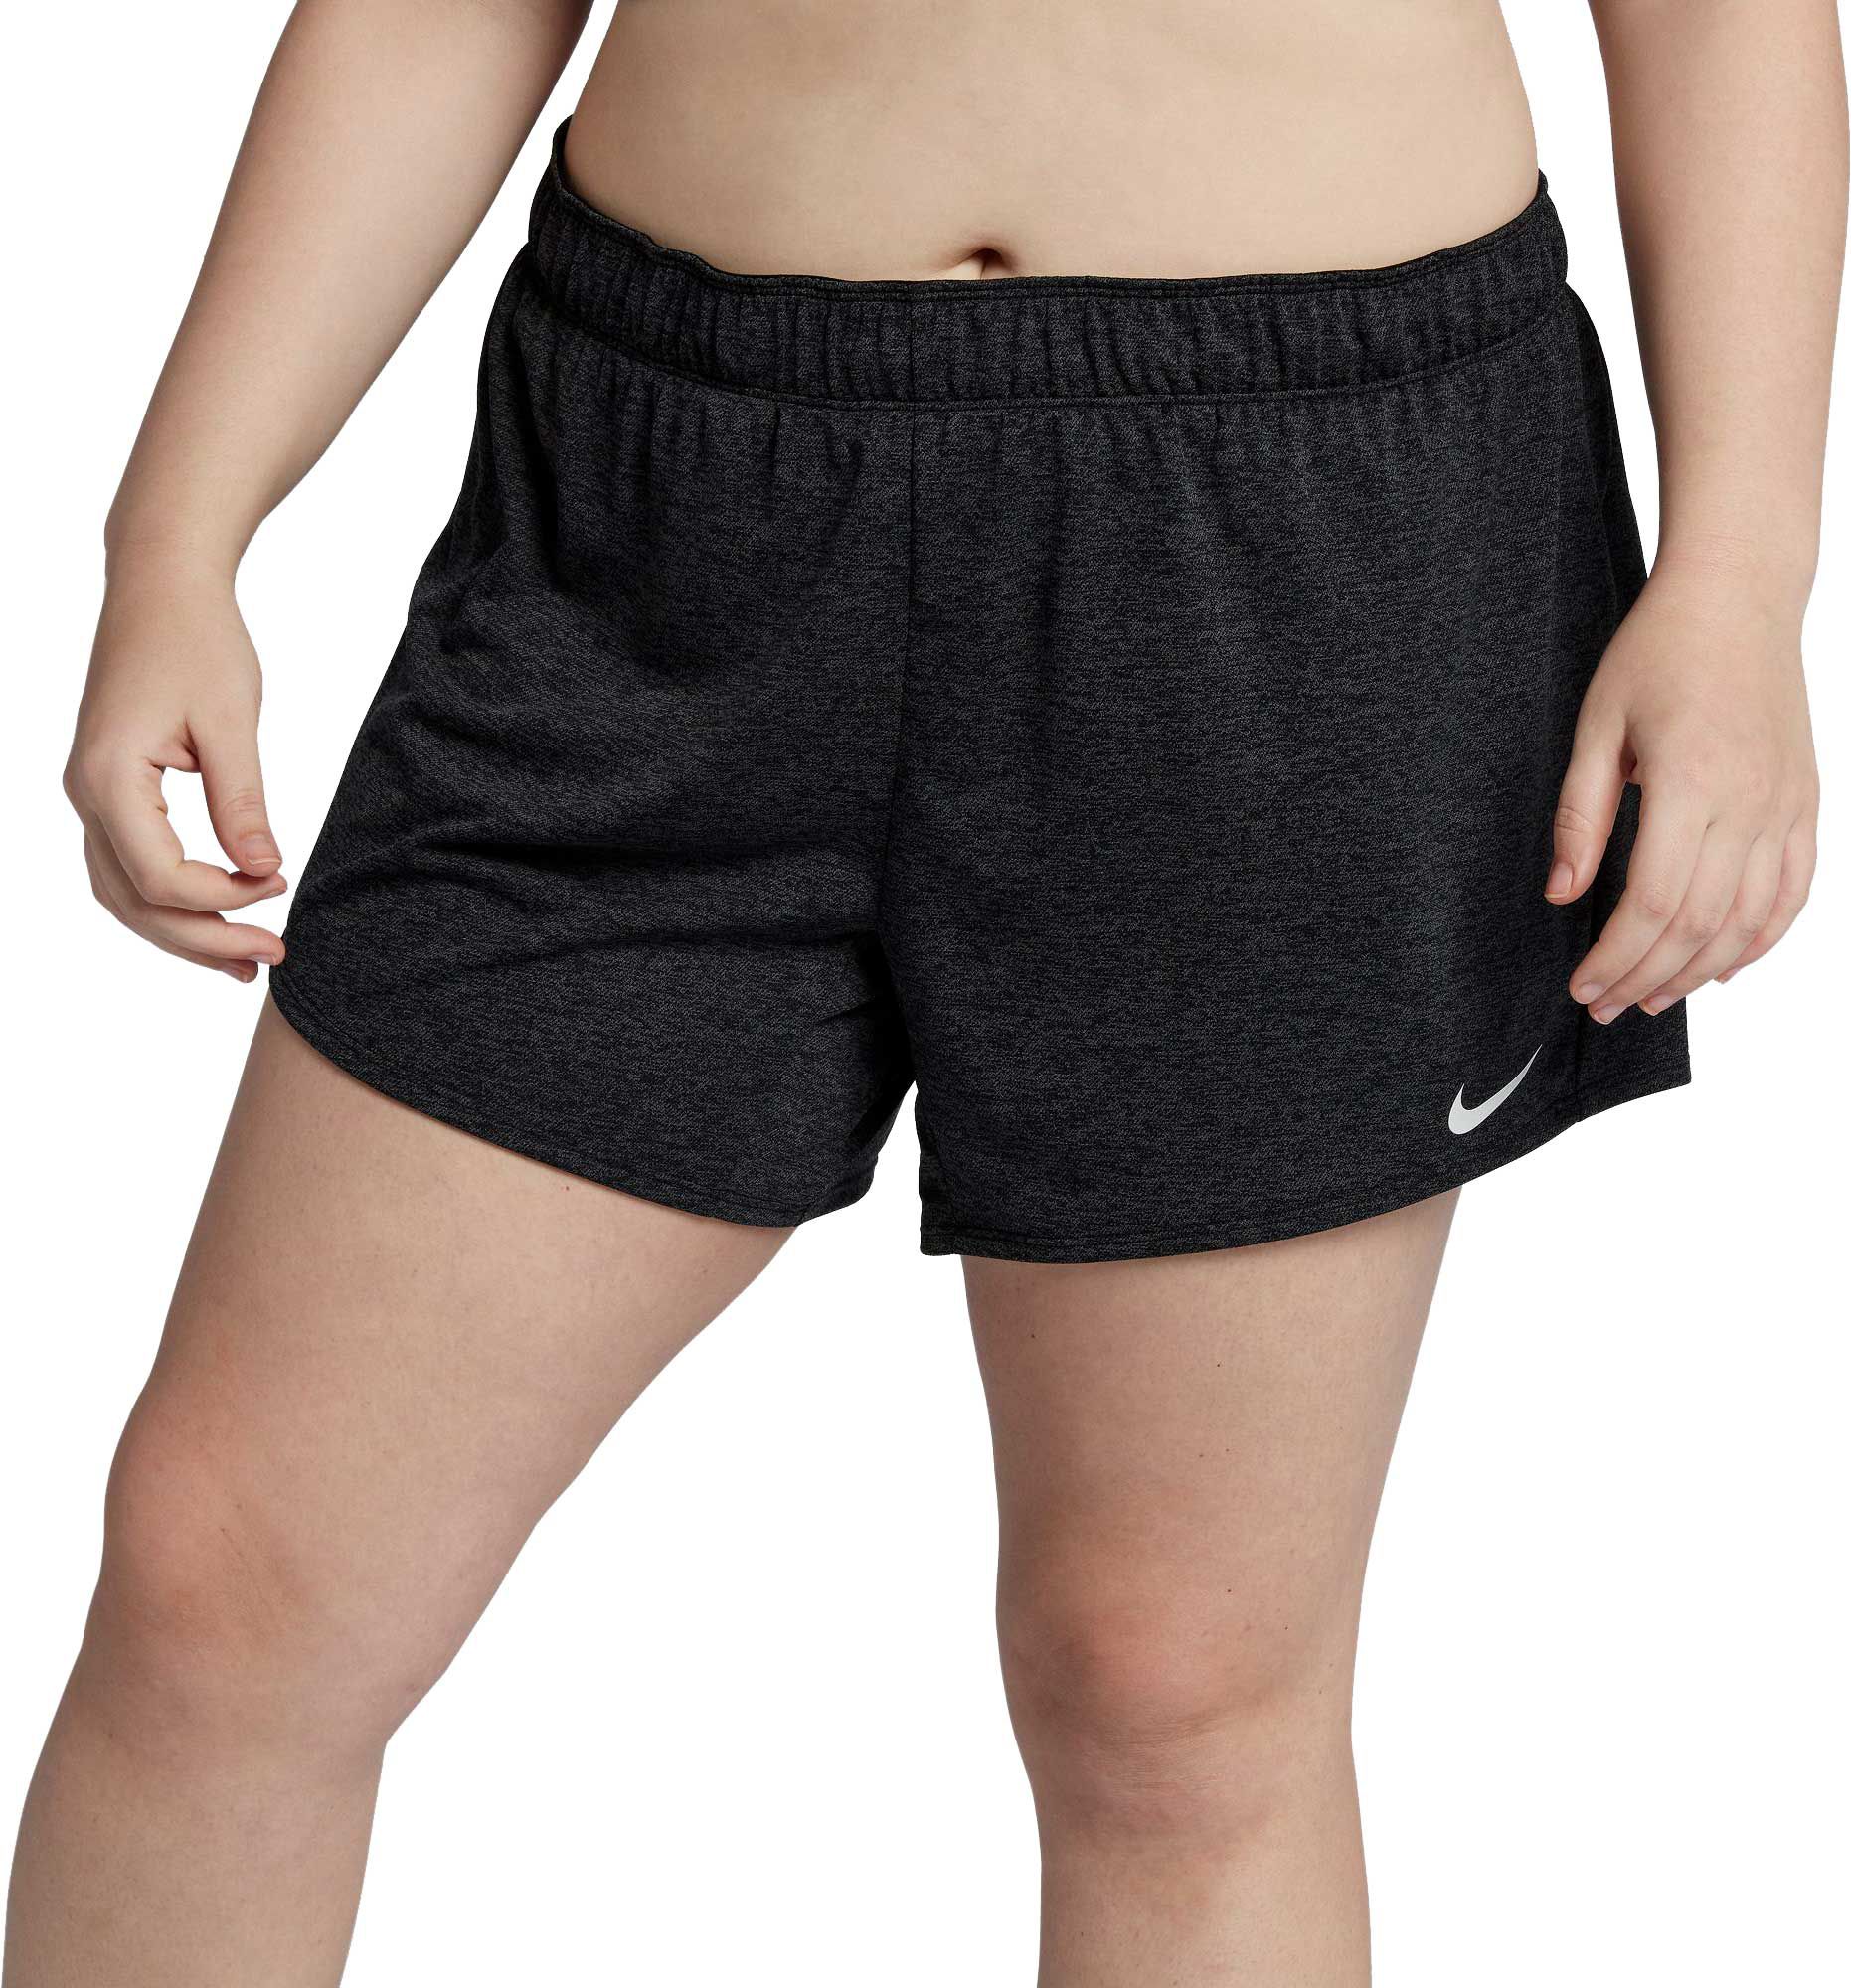 nike women's flex plus size training shorts